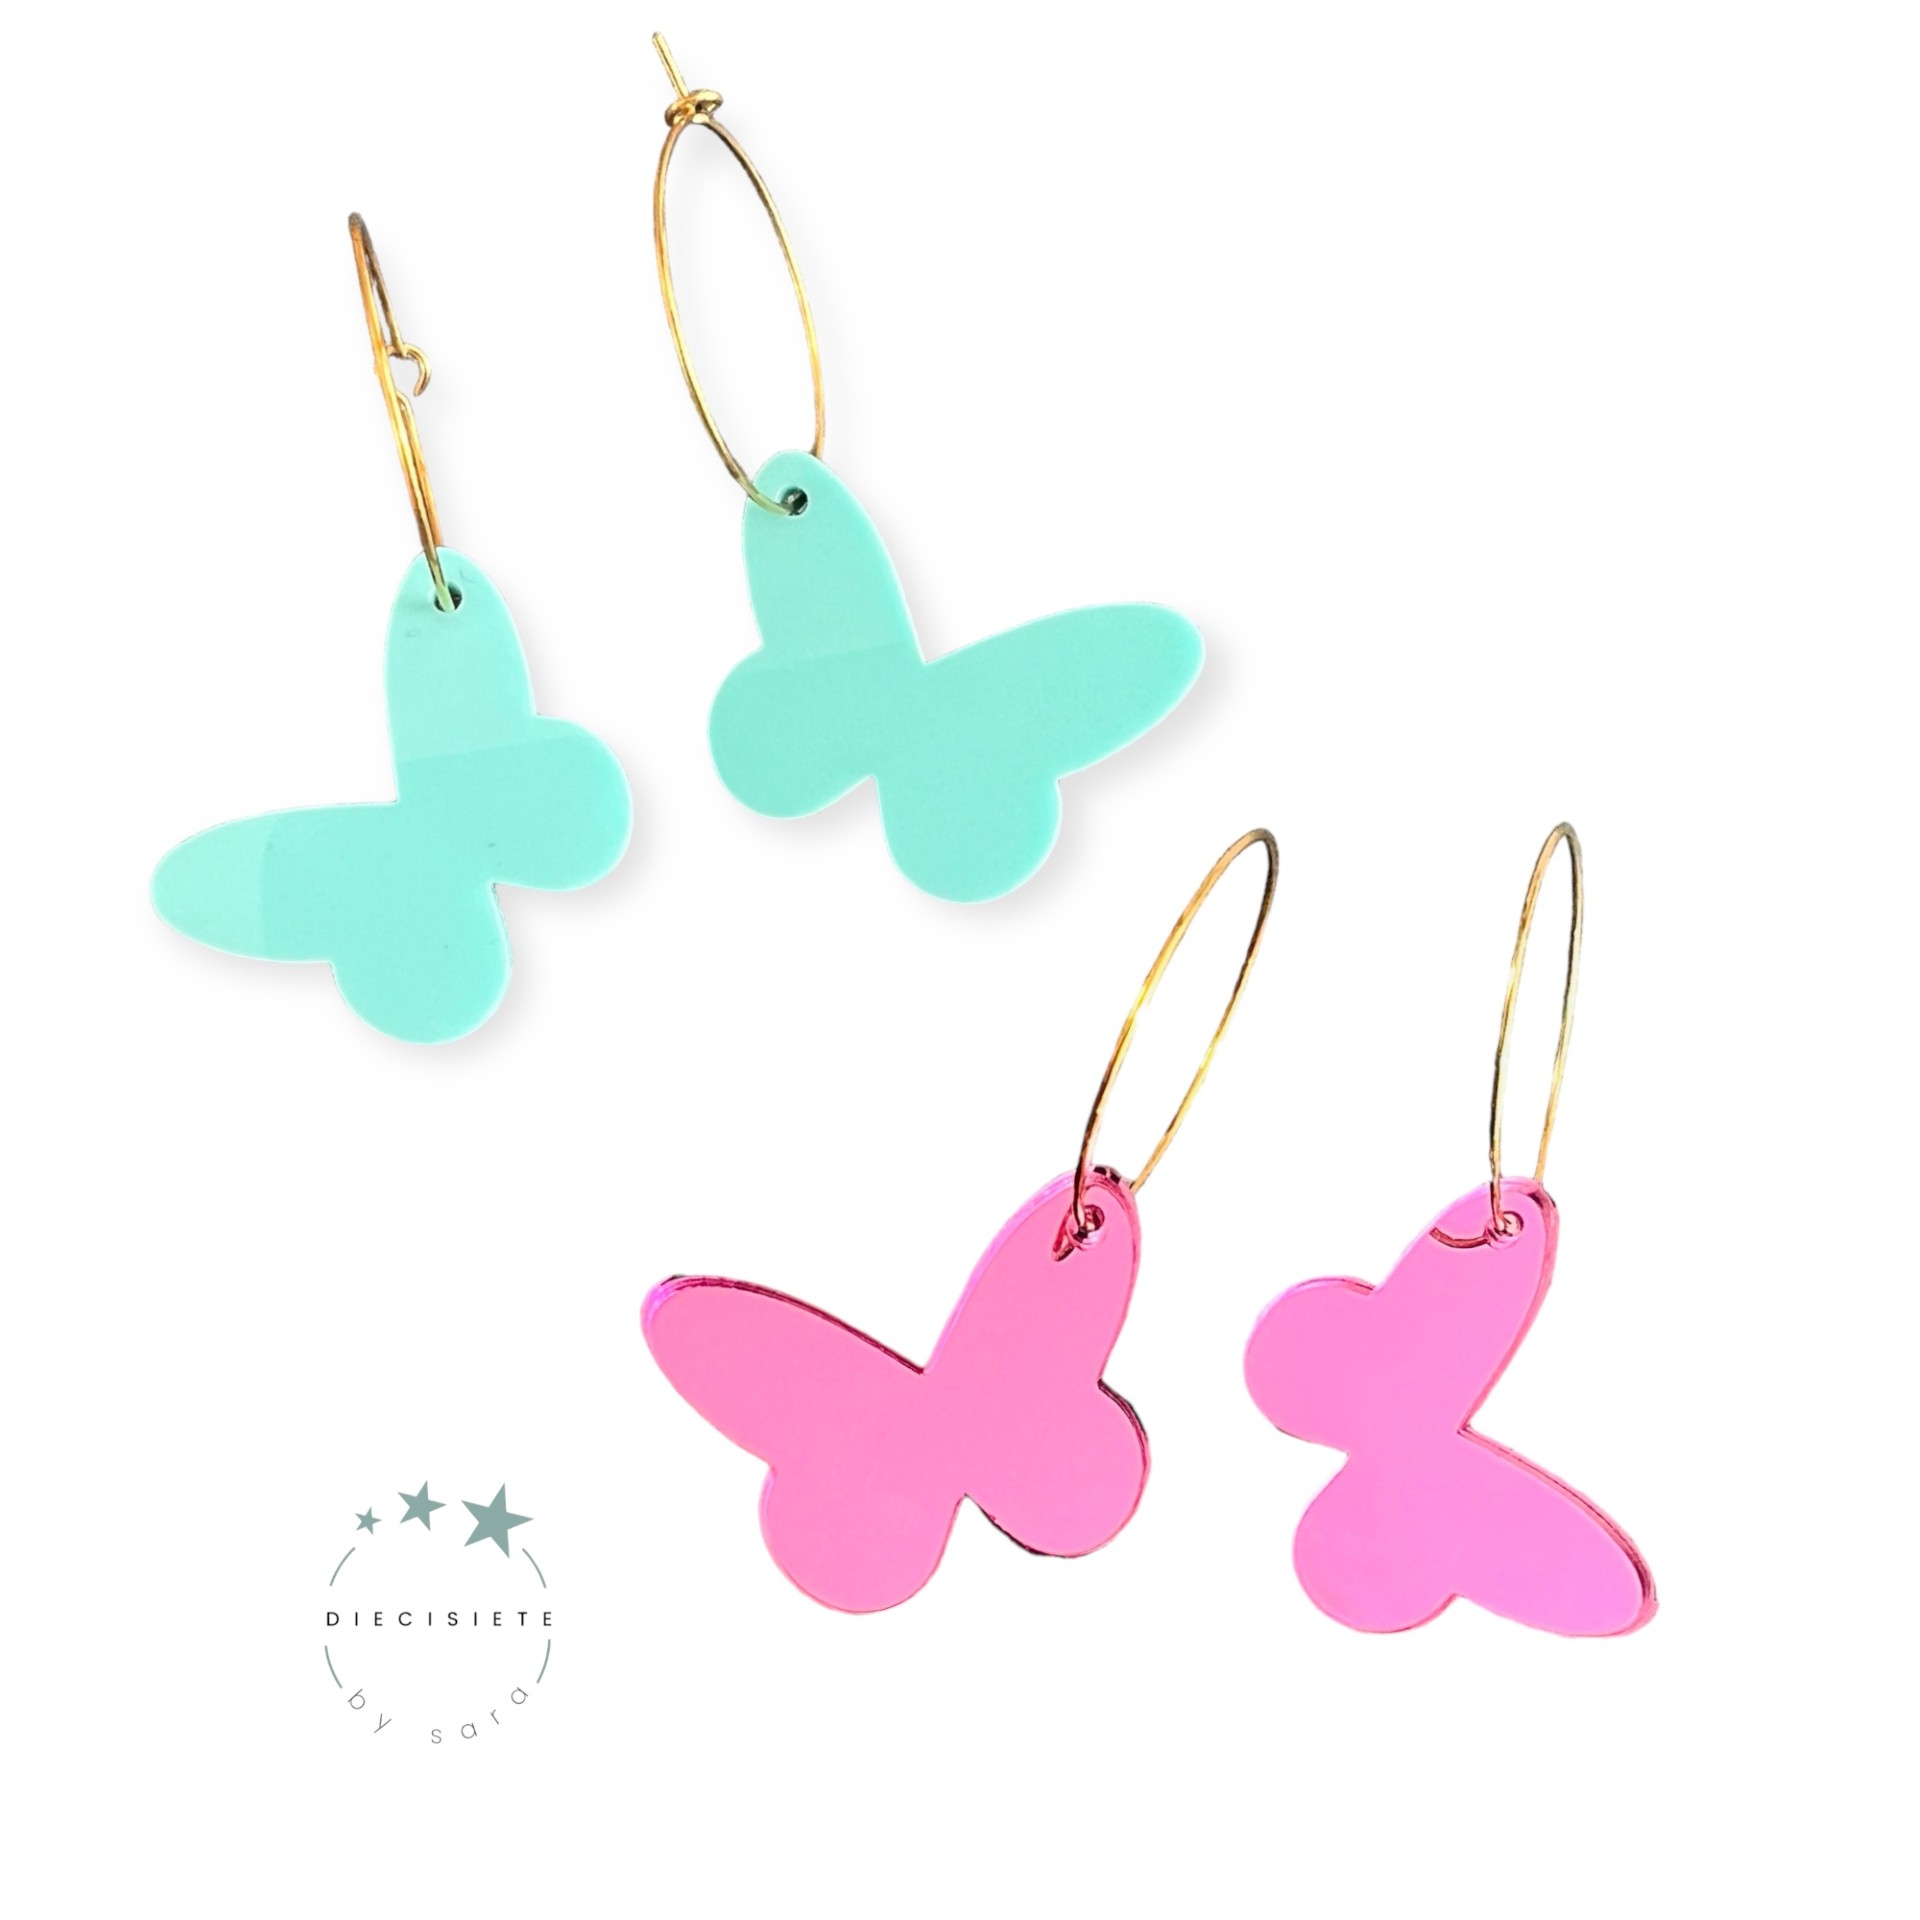 pendientes-aro-dorado-mariposas-color-diecisiete-by-sara-joyeria-acebo